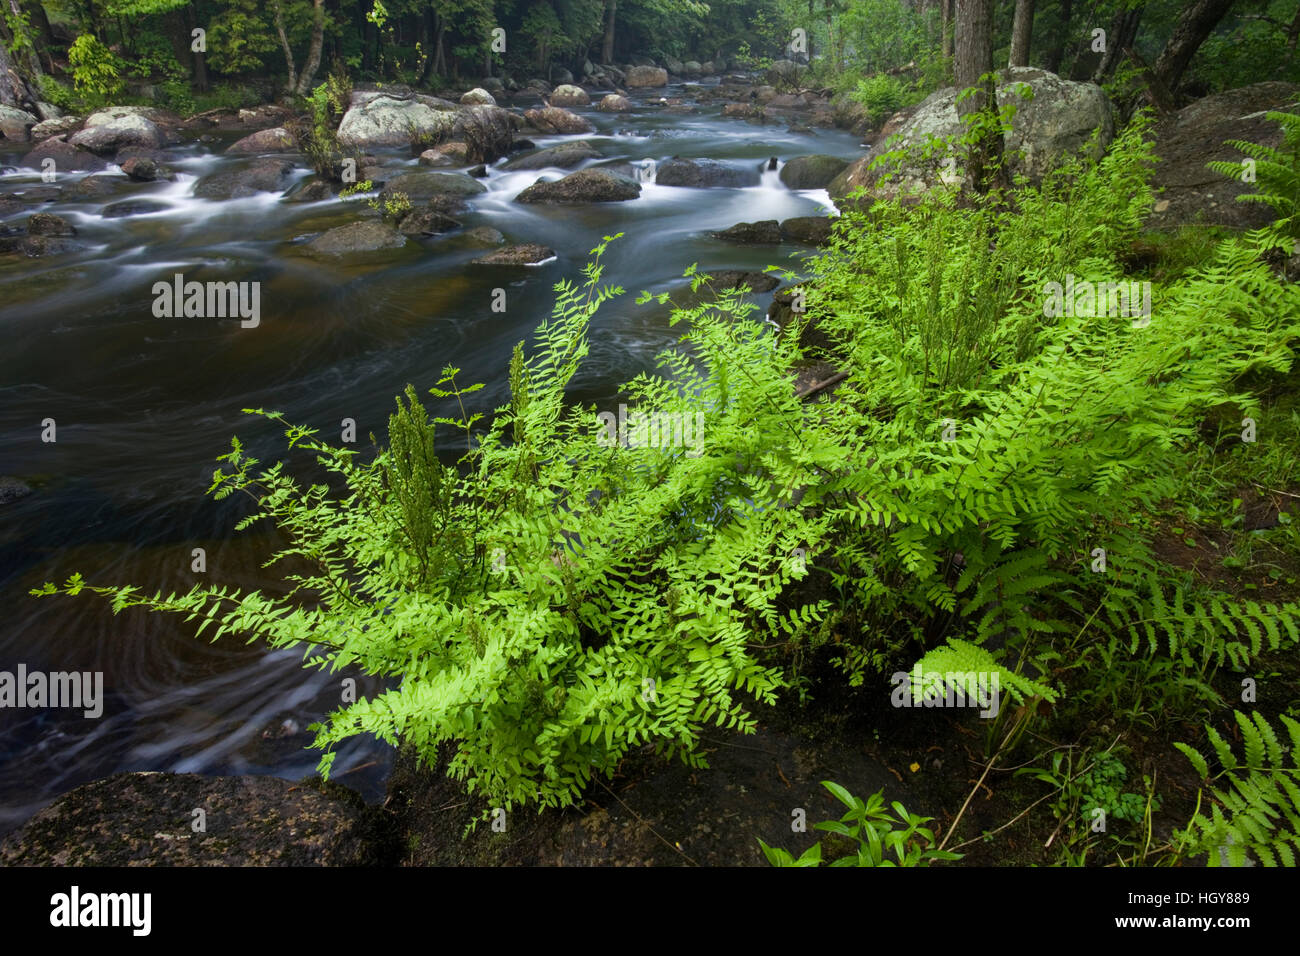 Royal ferns, Osmunda regalis, grow on the bank of the Ashuelot River near its source in Washington, New Hampshire. Stock Photo